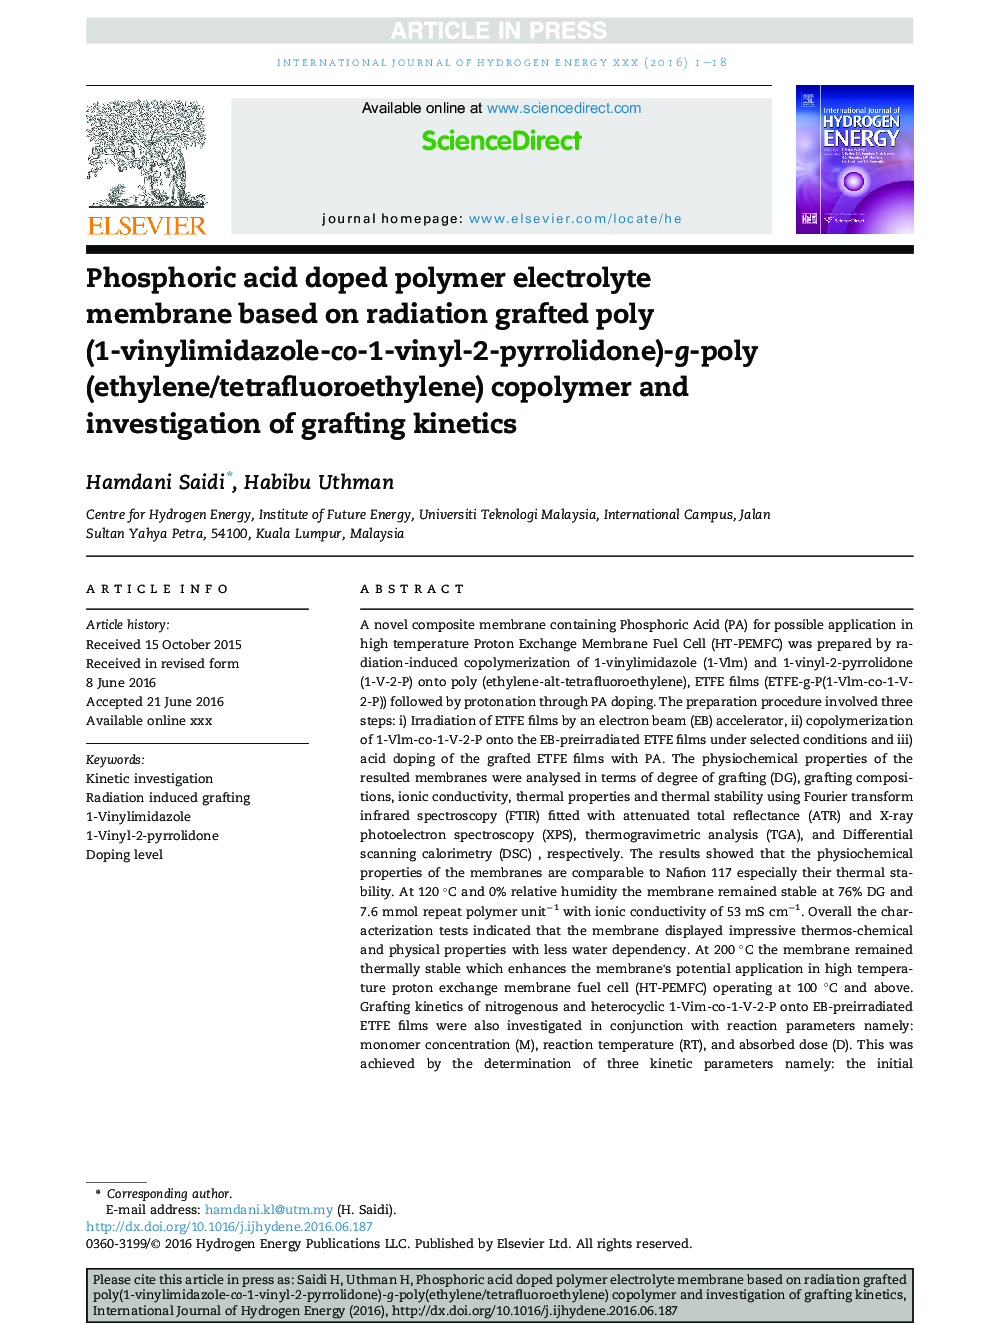 Phosphoric acid doped polymer electrolyte membrane based on radiation grafted poly(1-vinylimidazole-co-1-vinyl-2-pyrrolidone)-g-poly(ethylene/tetrafluoroethylene) copolymer and investigation of grafting kinetics